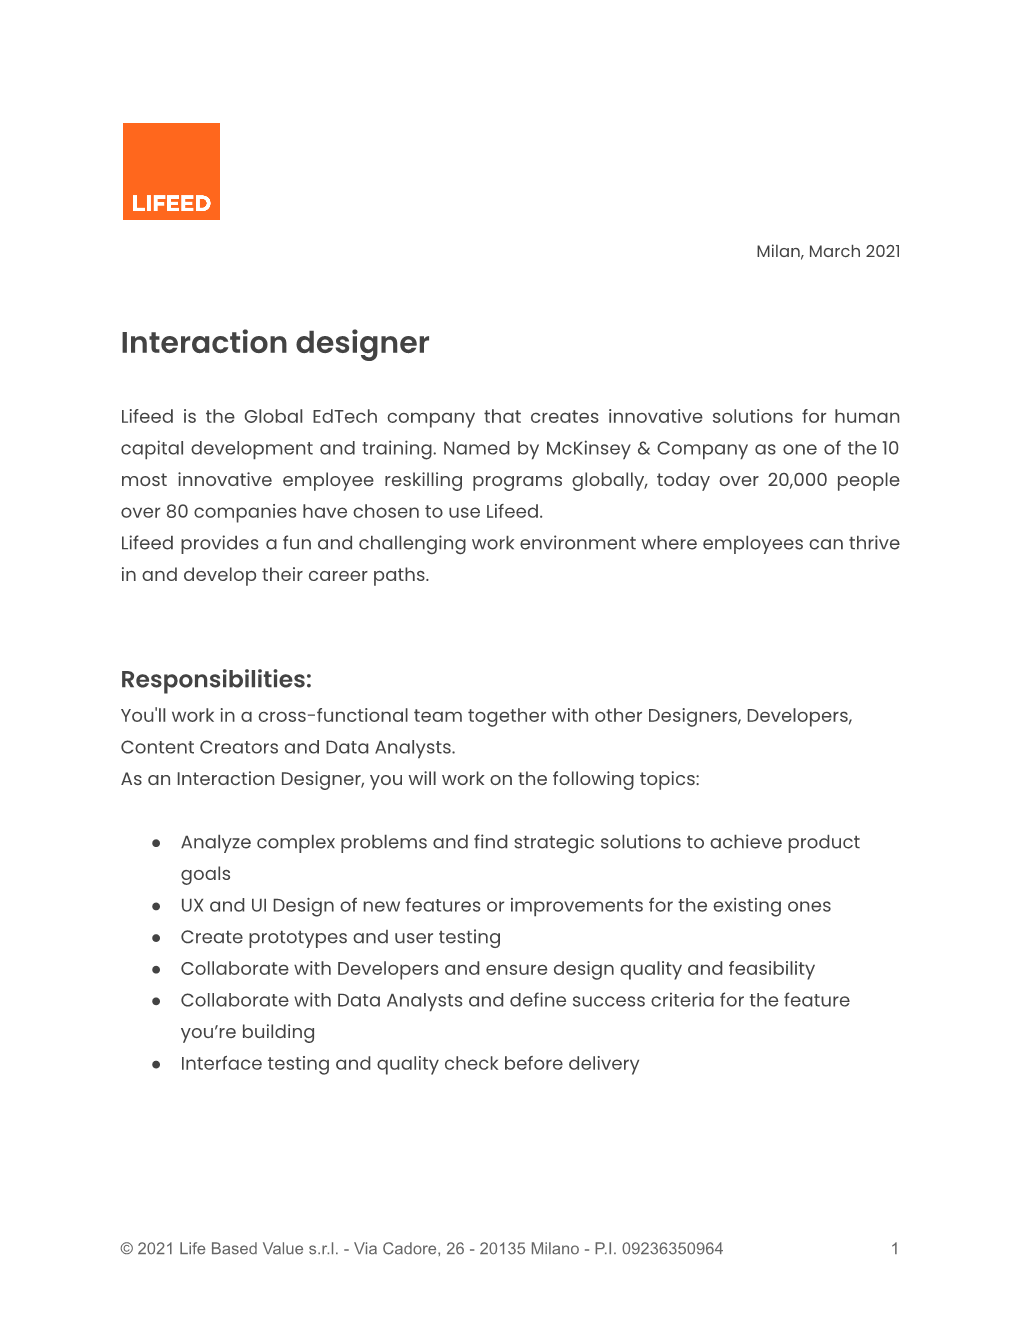 Interaction Designer Application